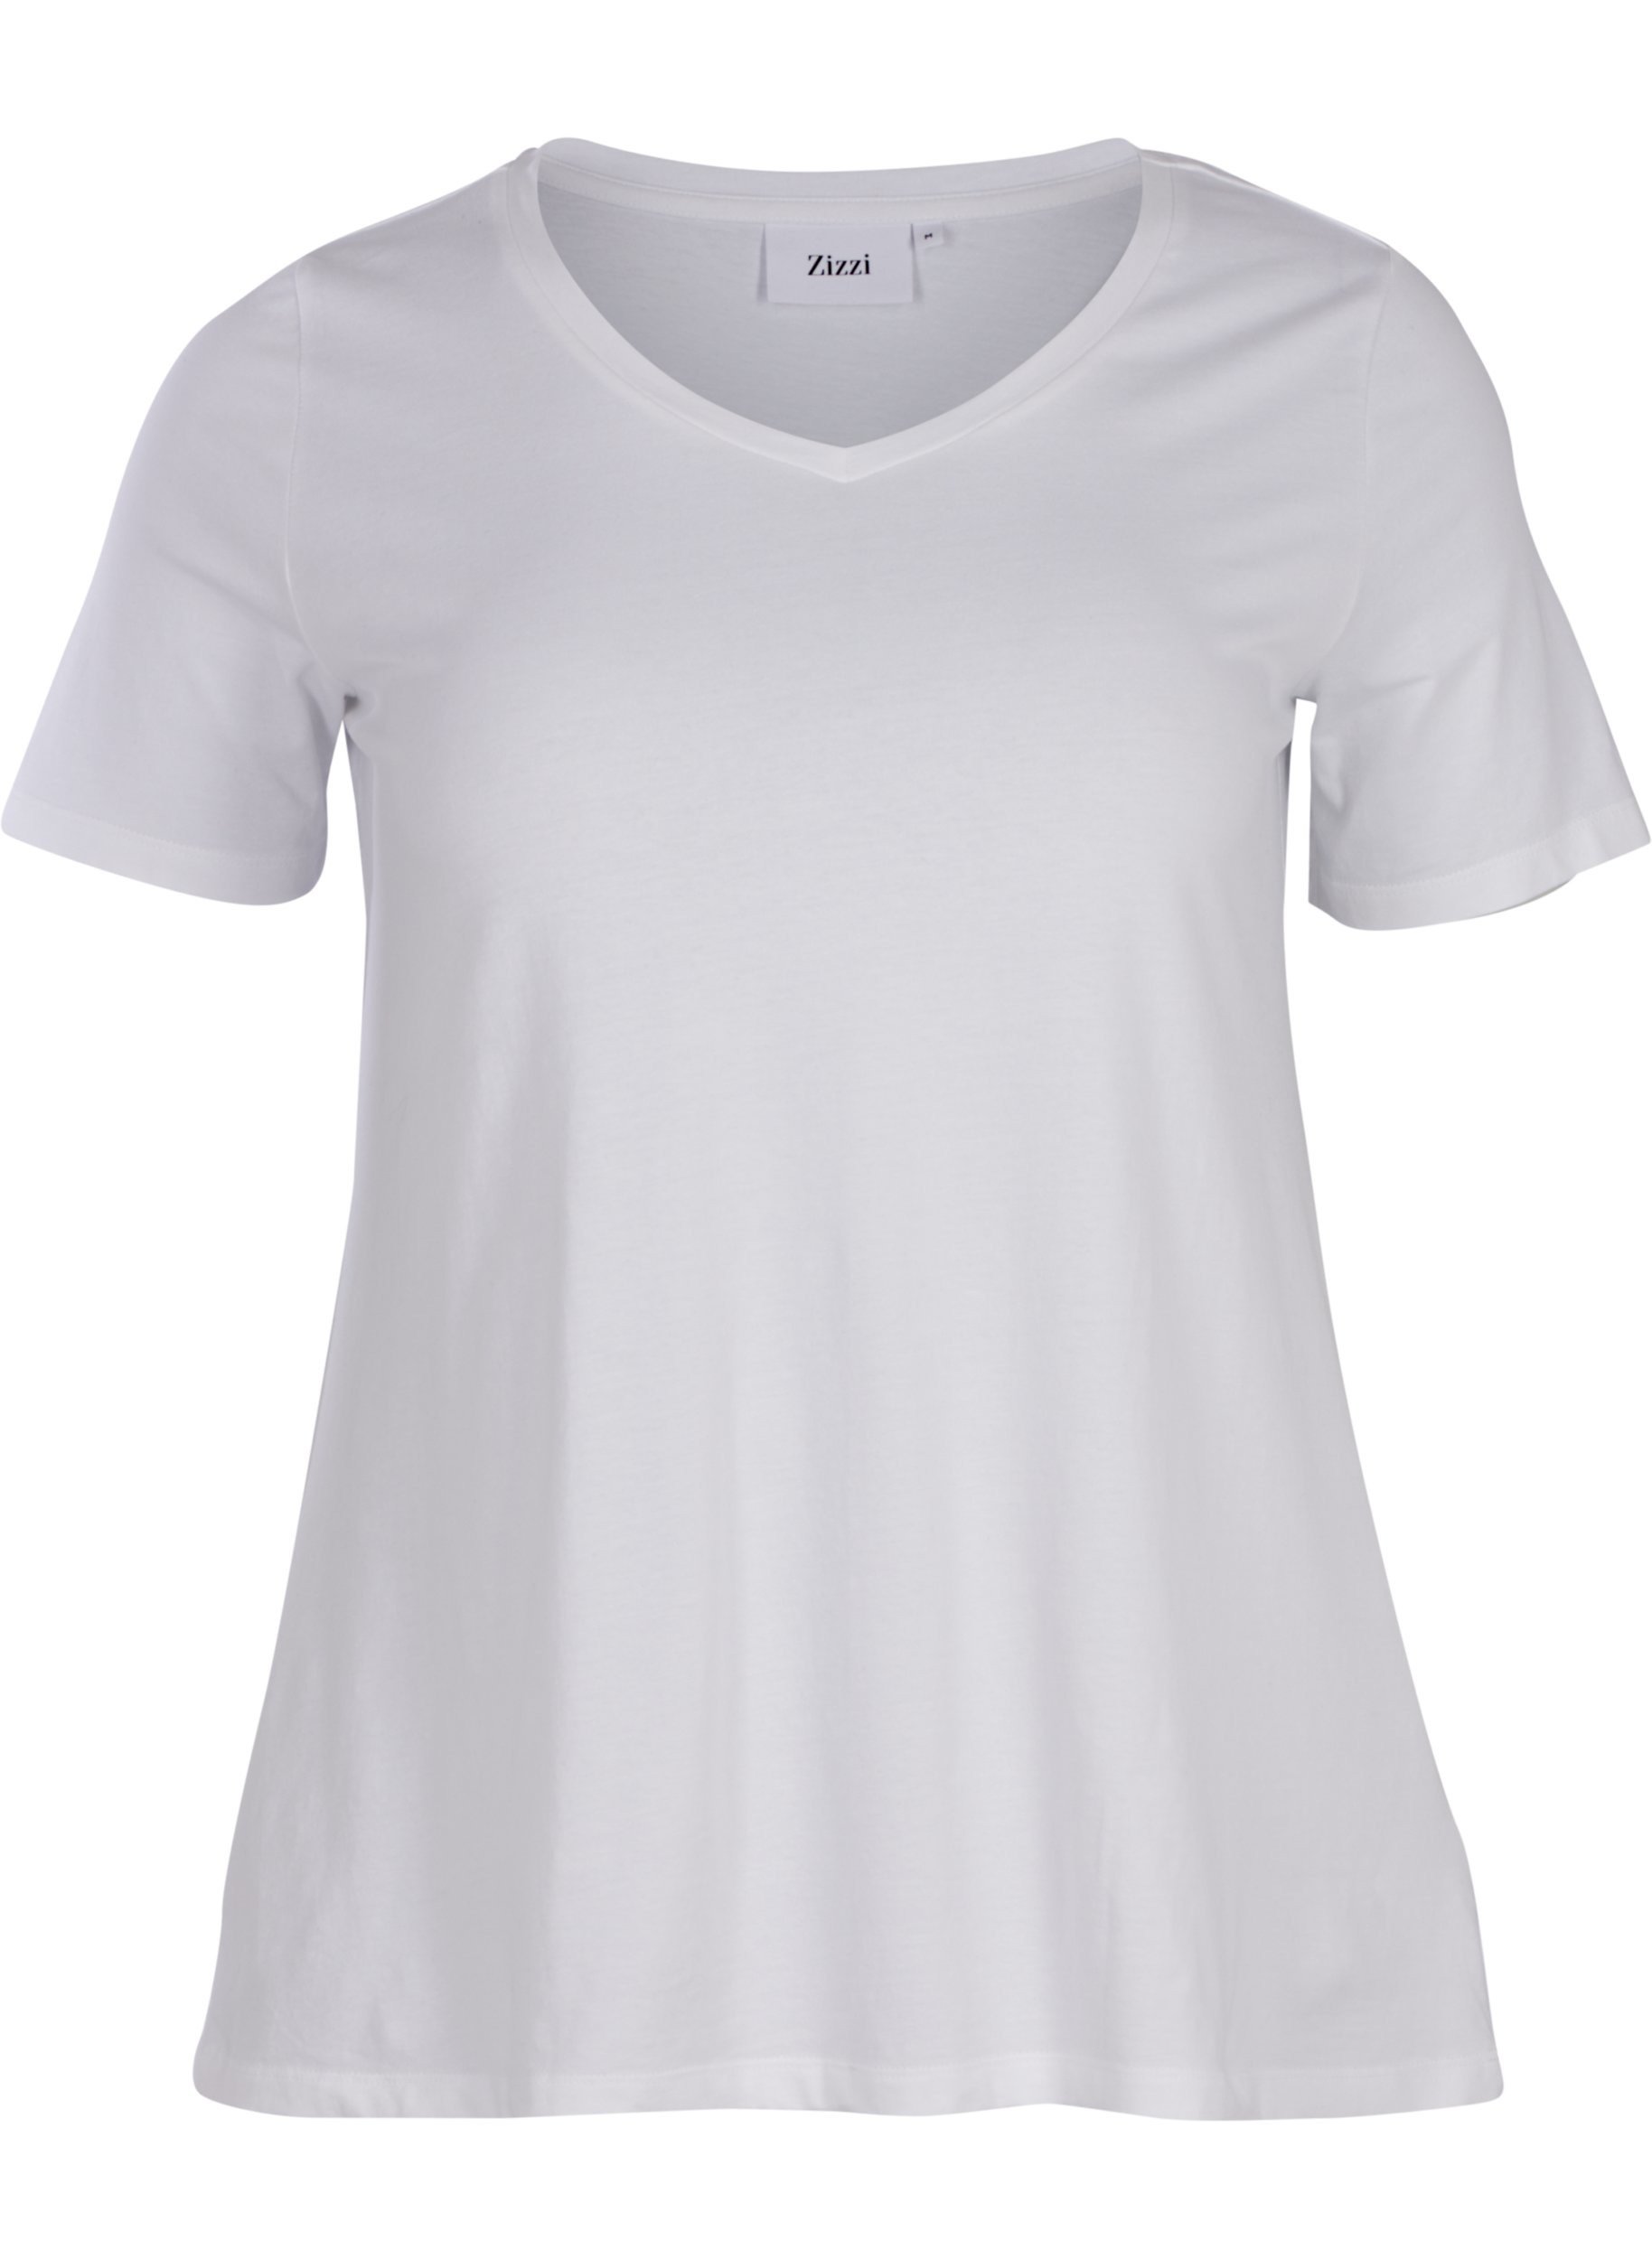 Basis T-Shirt, Bright White